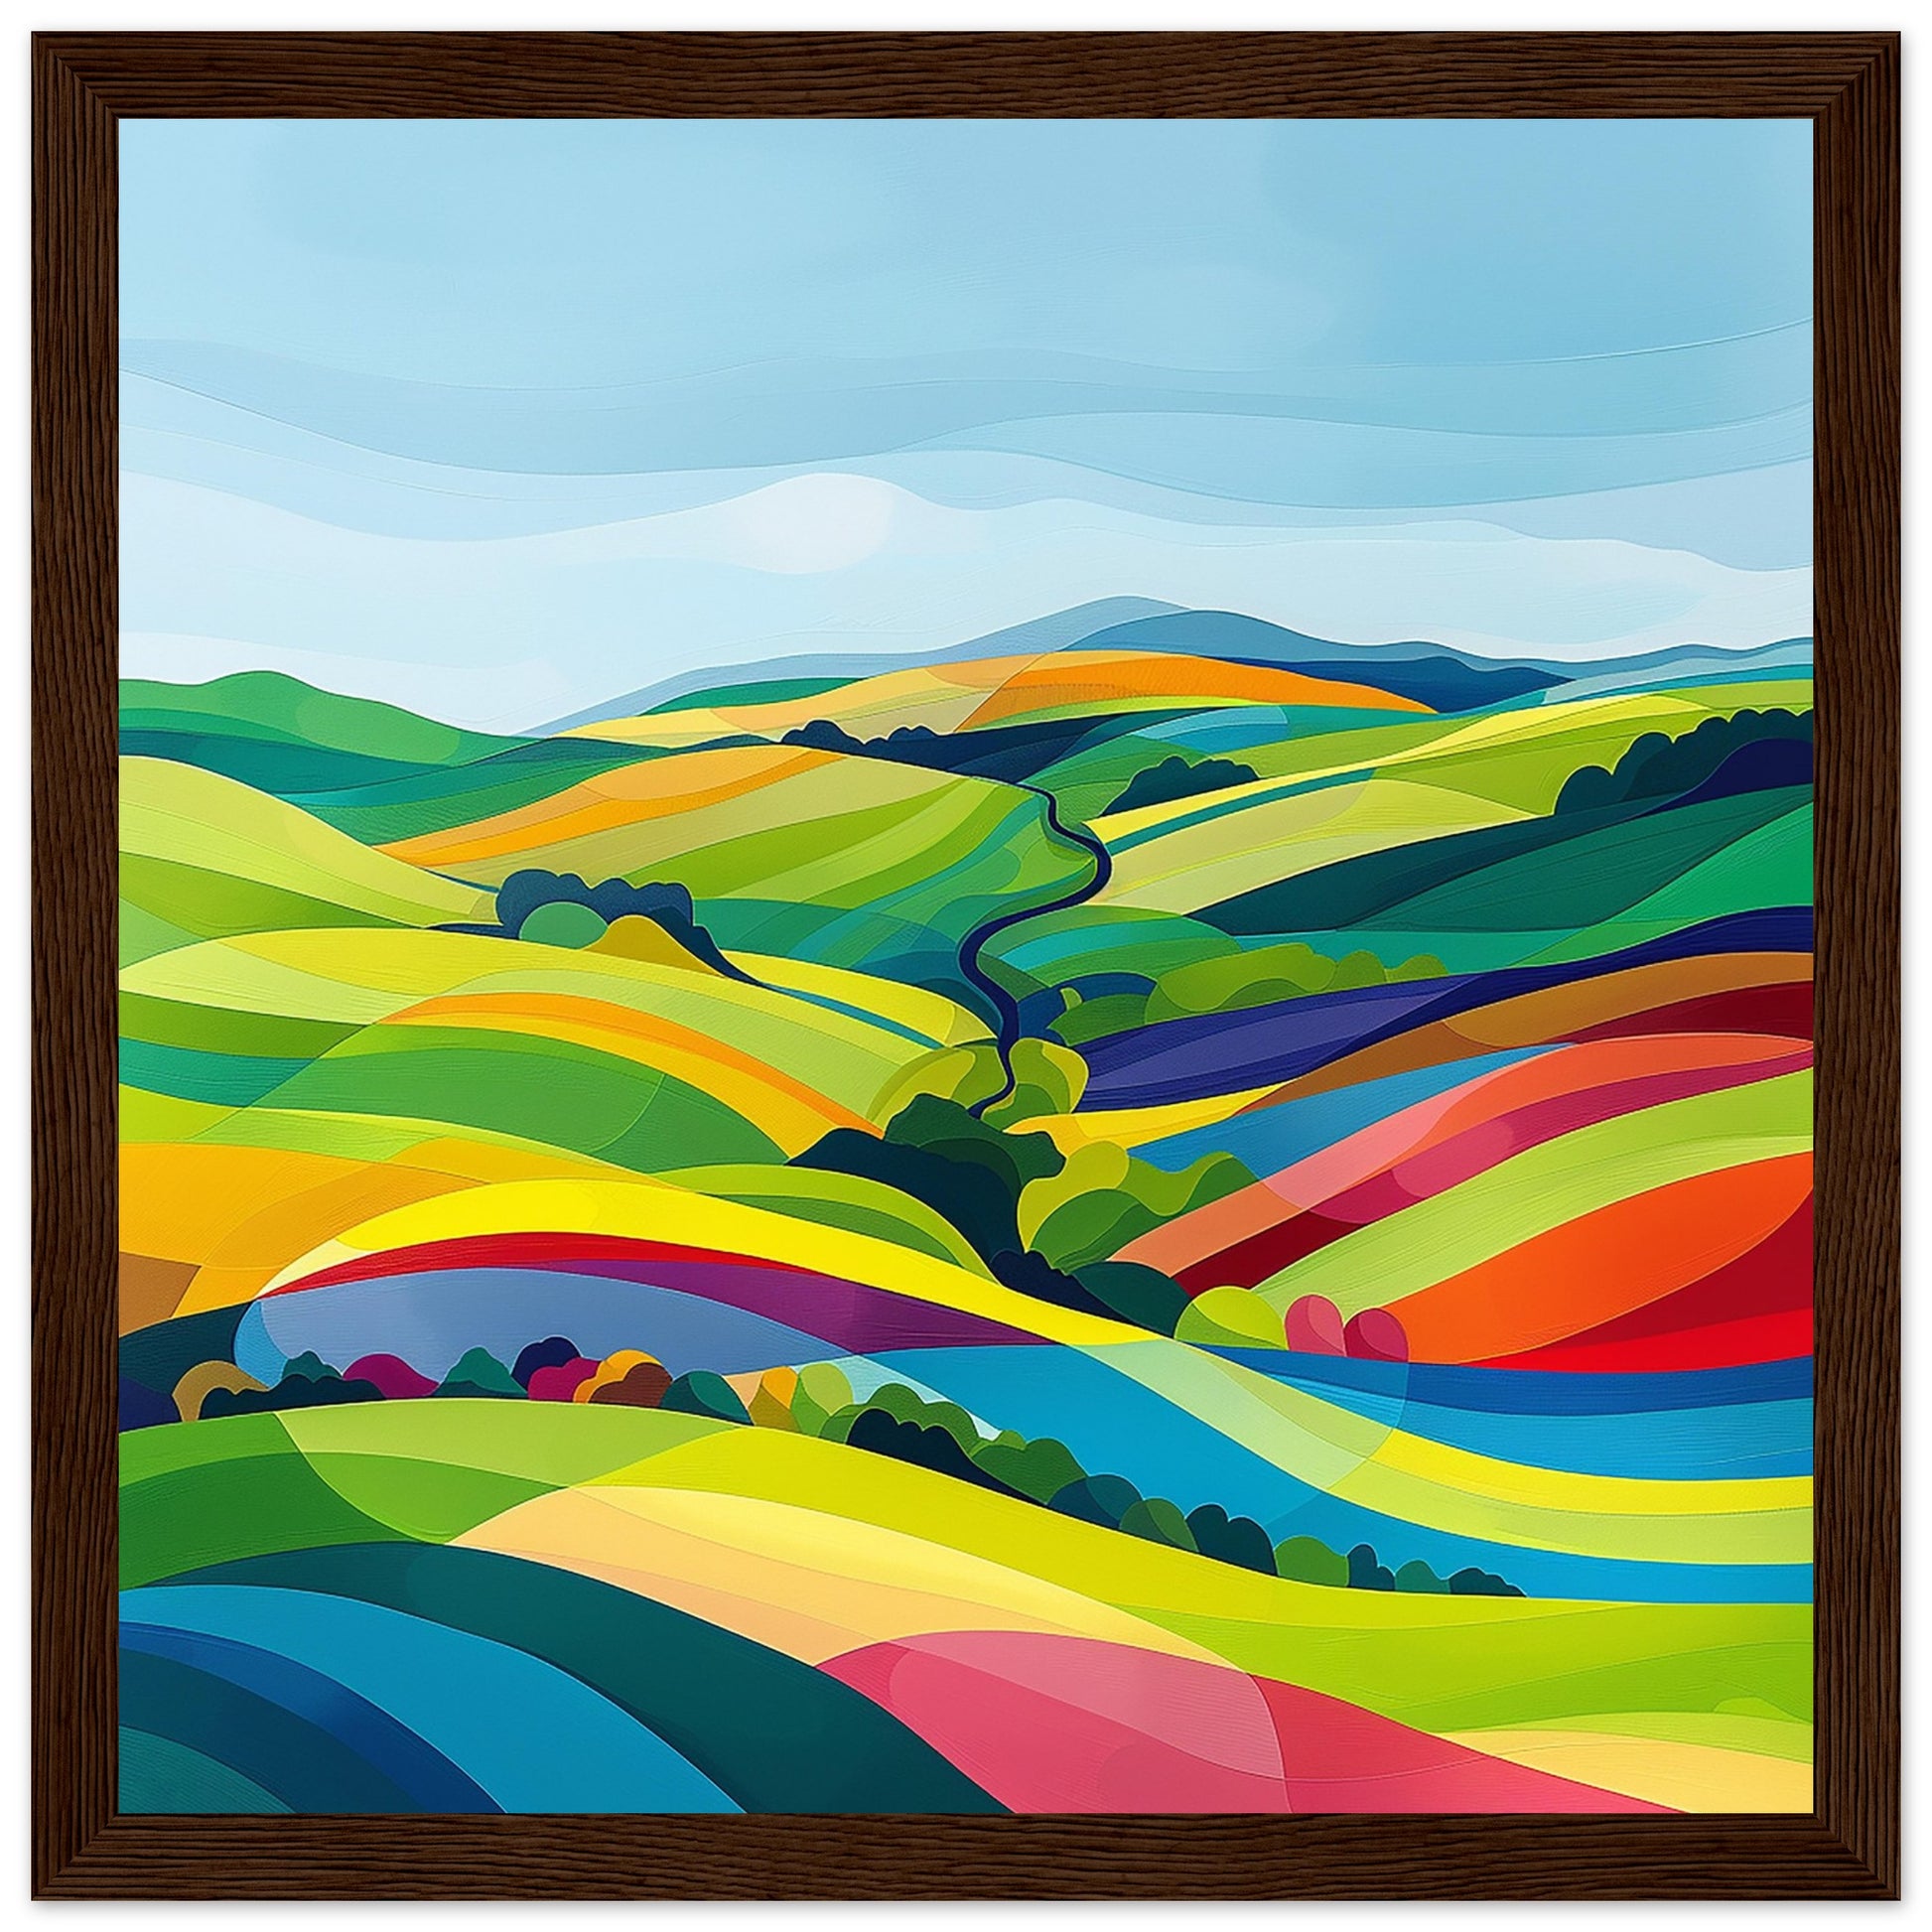 Vivid Valleys: Summer's Palette dark wood framed art print  | by Print Room Ltd